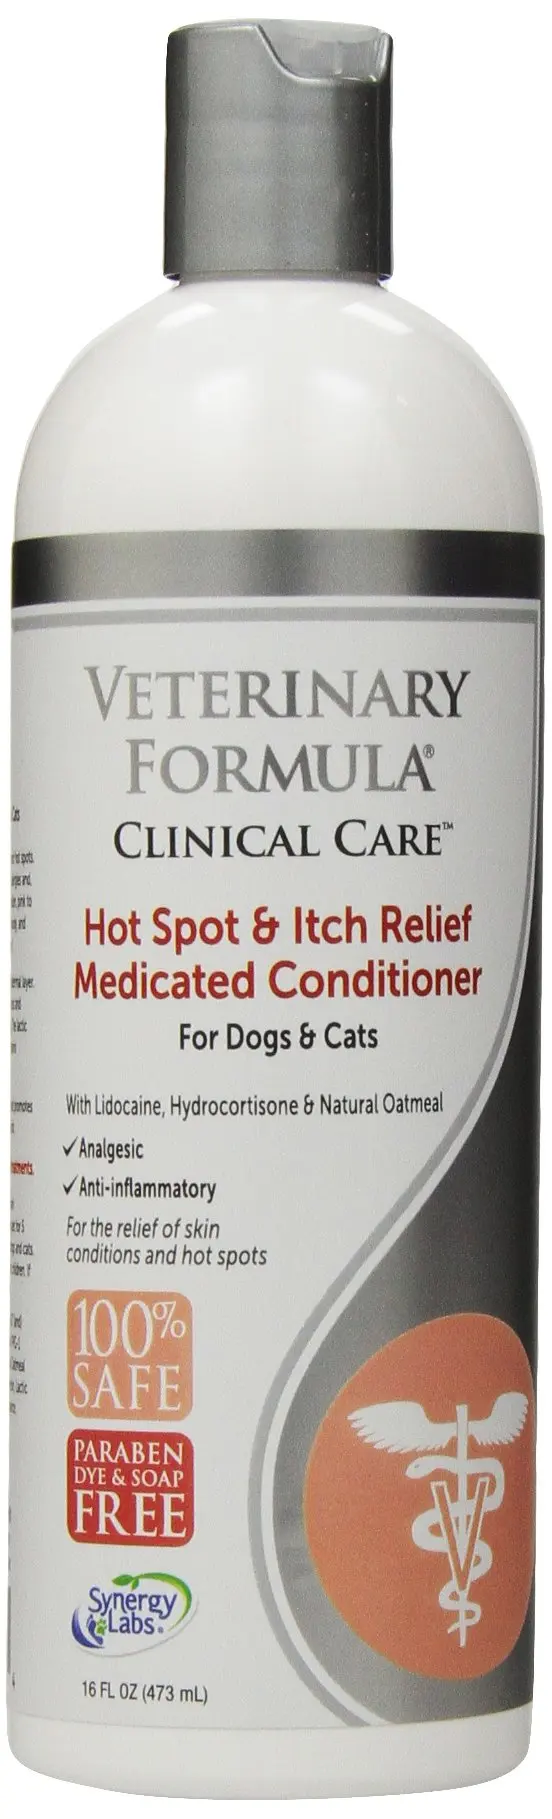 synergy labs veterinary formula clinical care gel